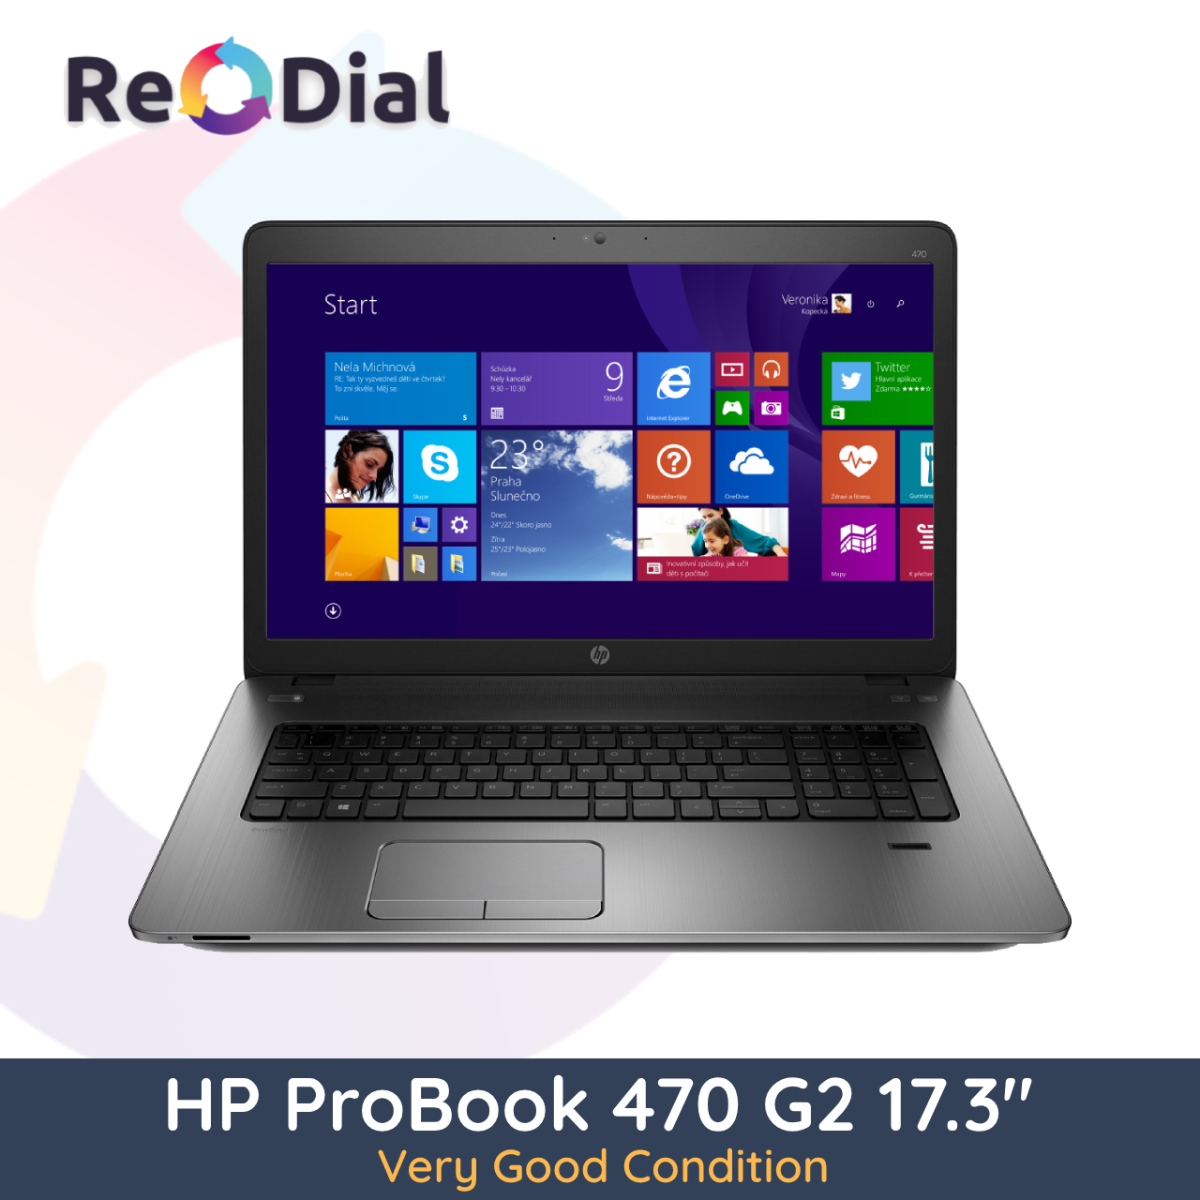 HP ProBook 470 G2 17.3" Laptop i7-5500U 500GB HDD 8GB RAM - Very Good Condition